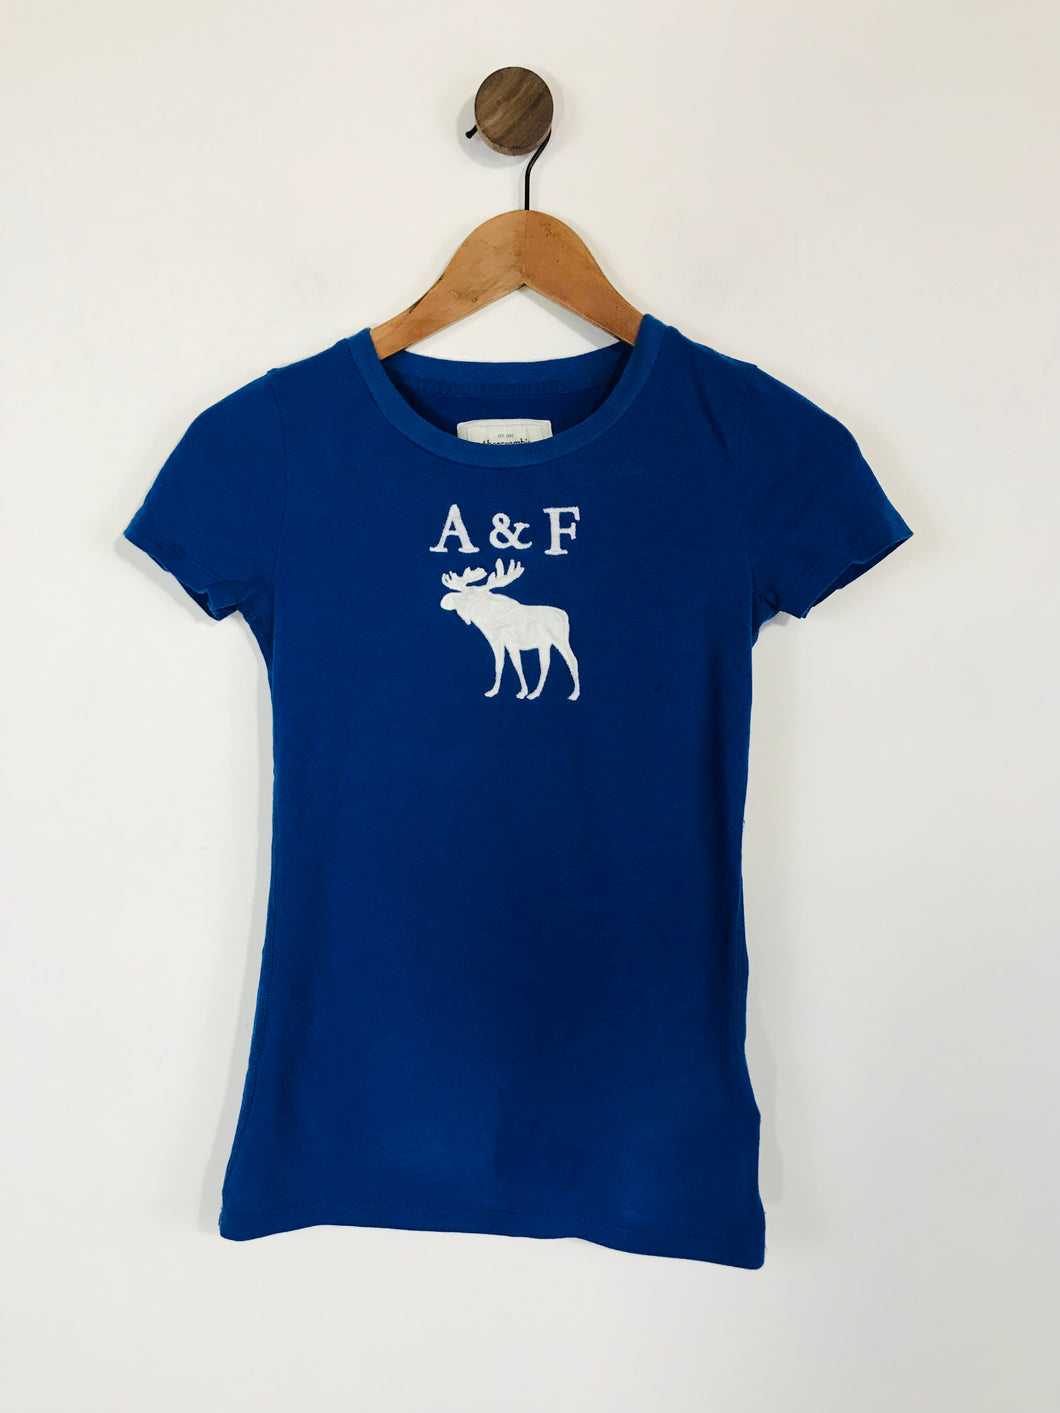 Abercrombie & Fitch Women's Slim Fit T-Shirt  | XS UK6-8 | Blue